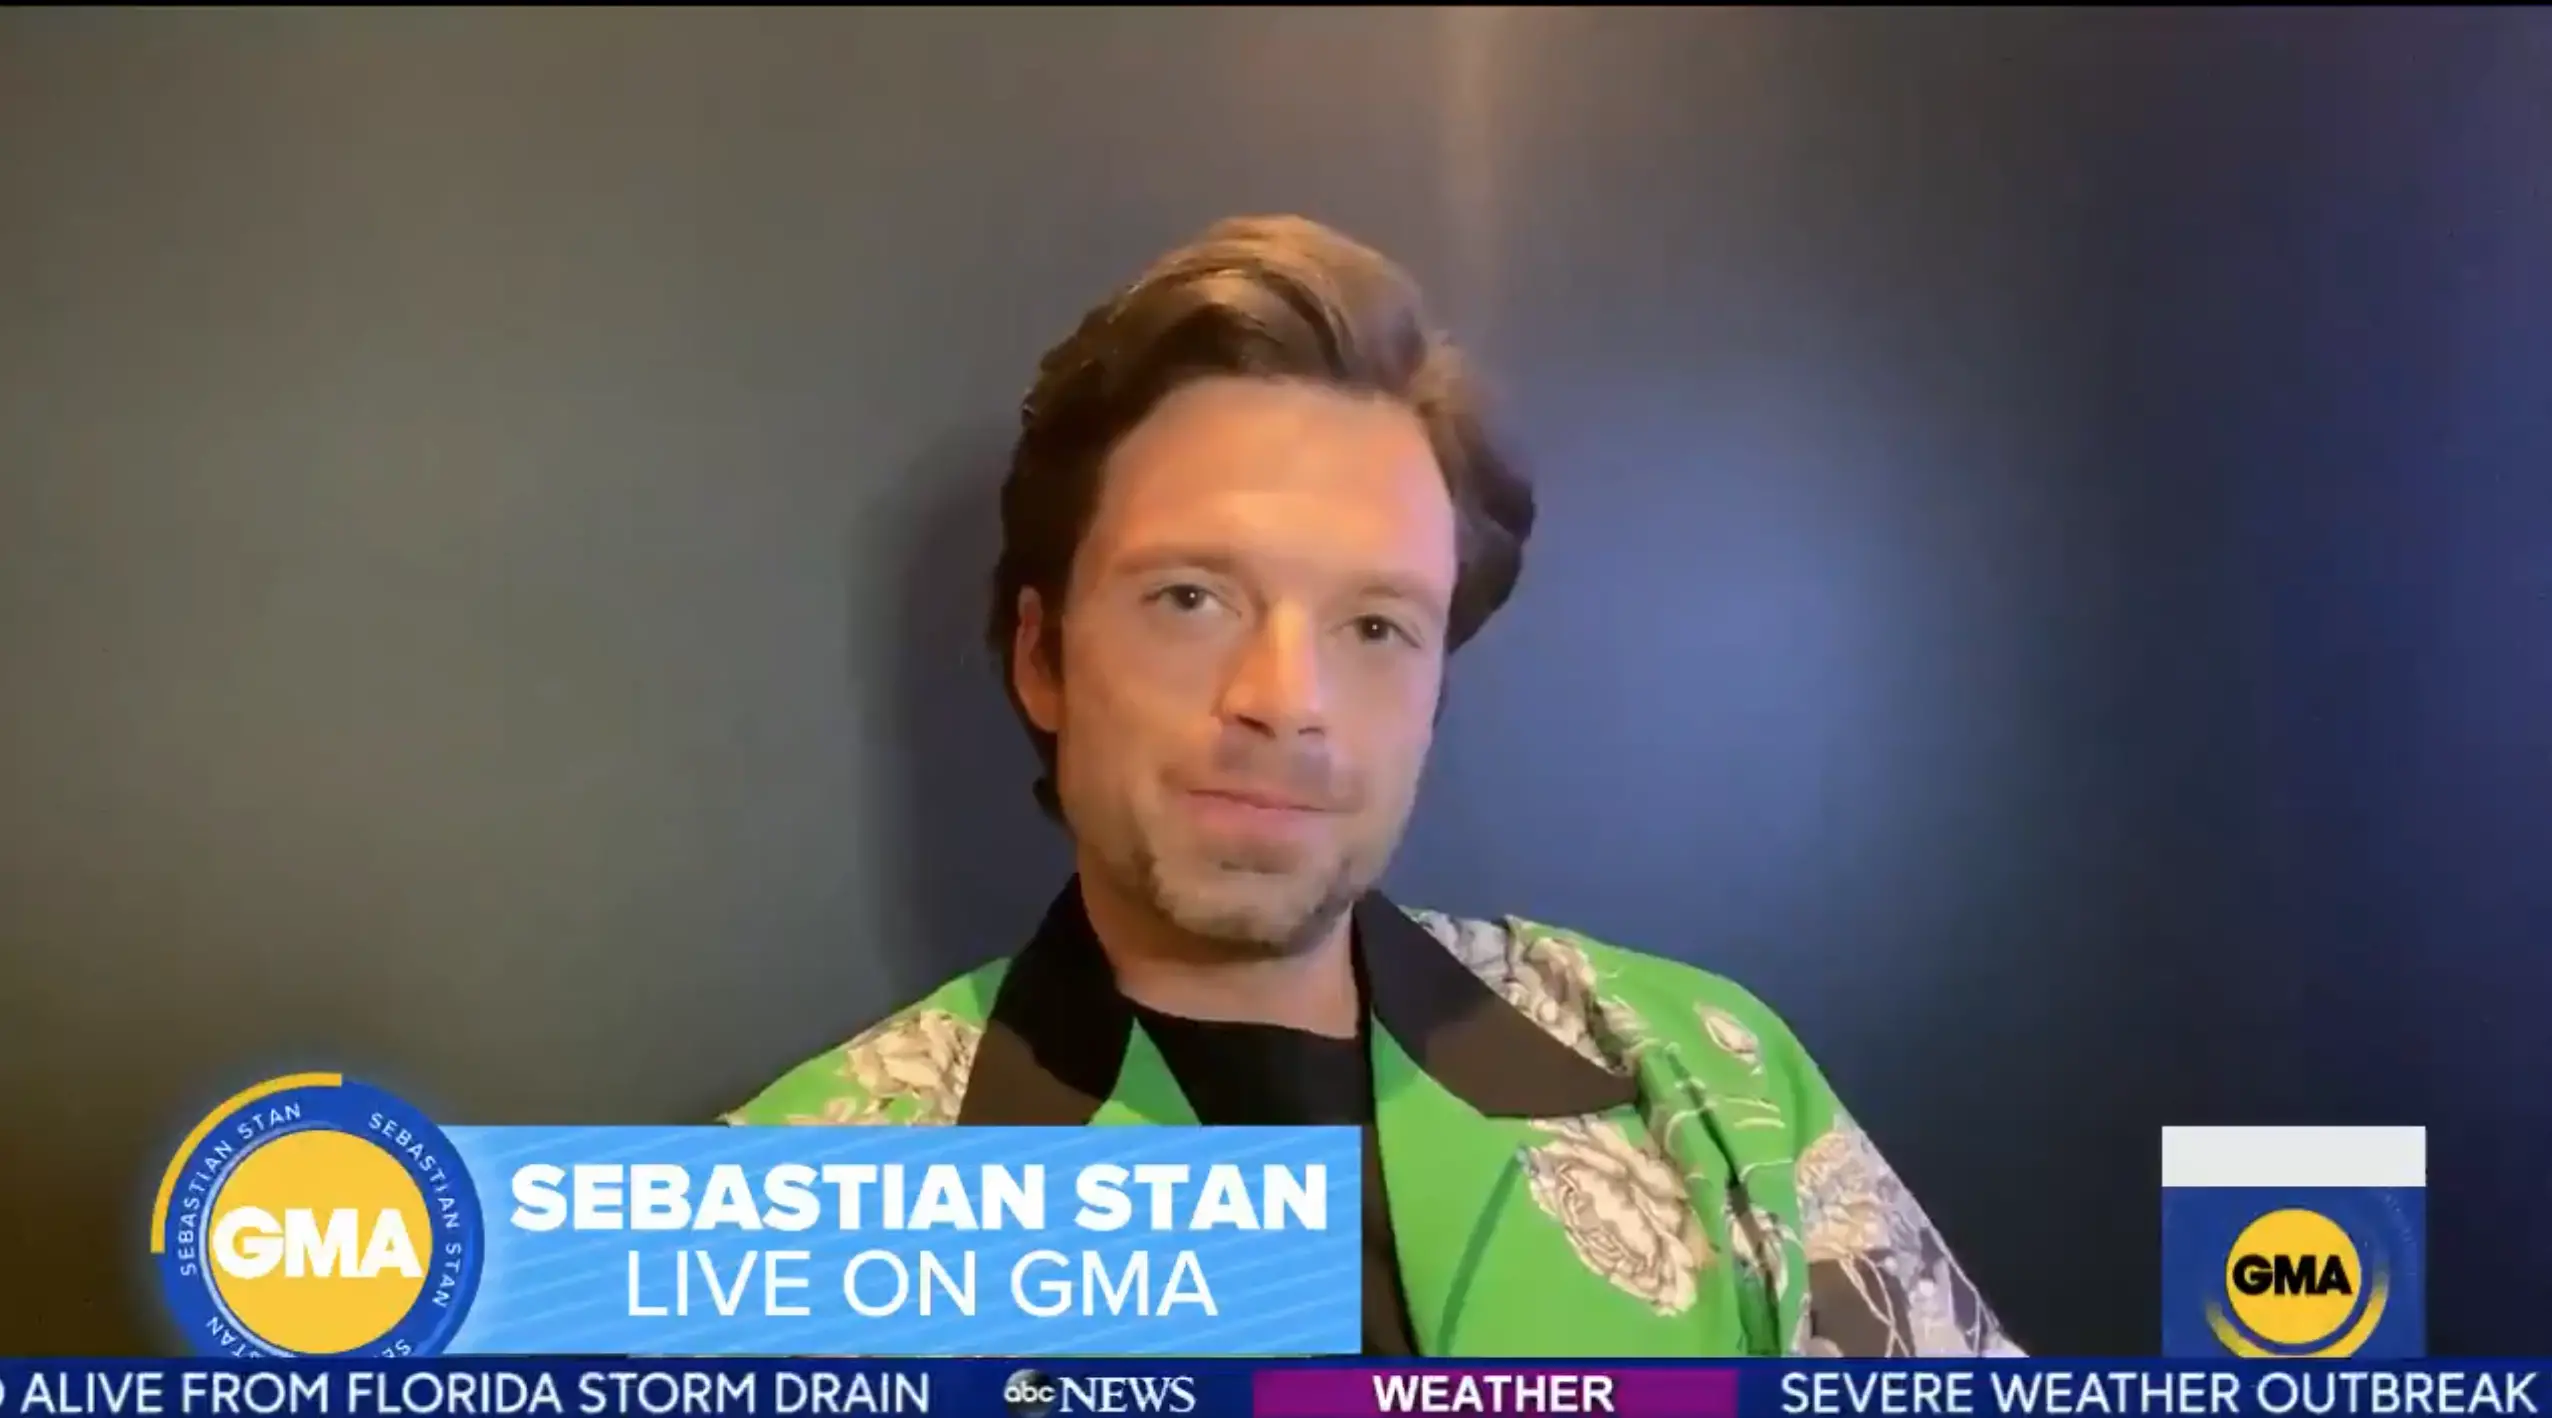 Sebastian Stan on GMA